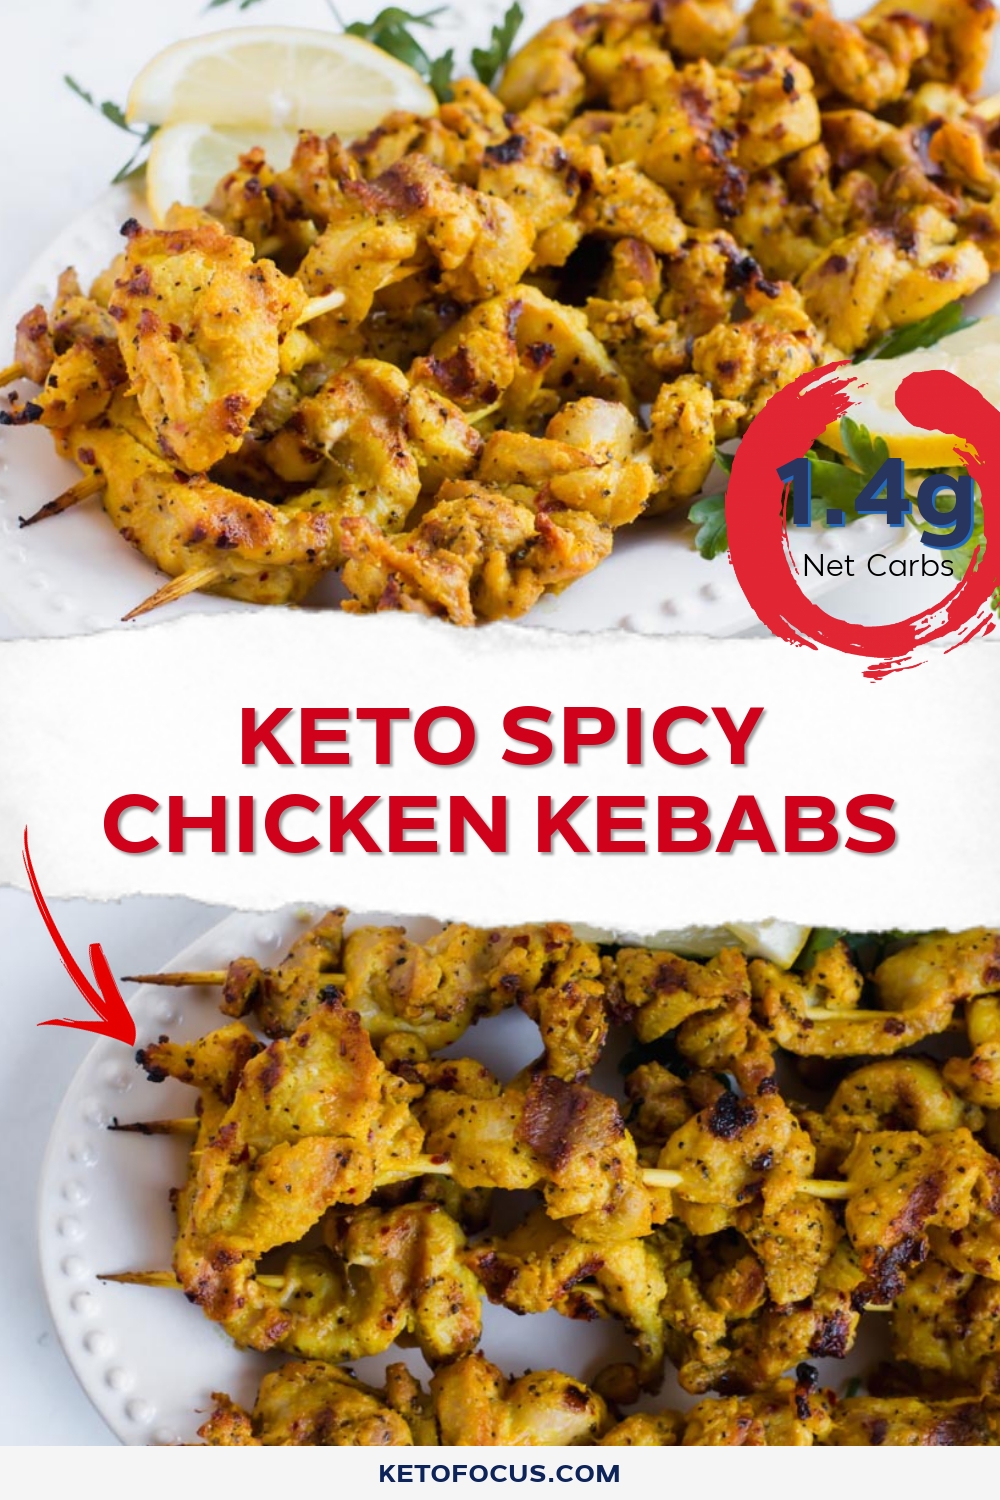 Keto Spicy Chicken Kebabs